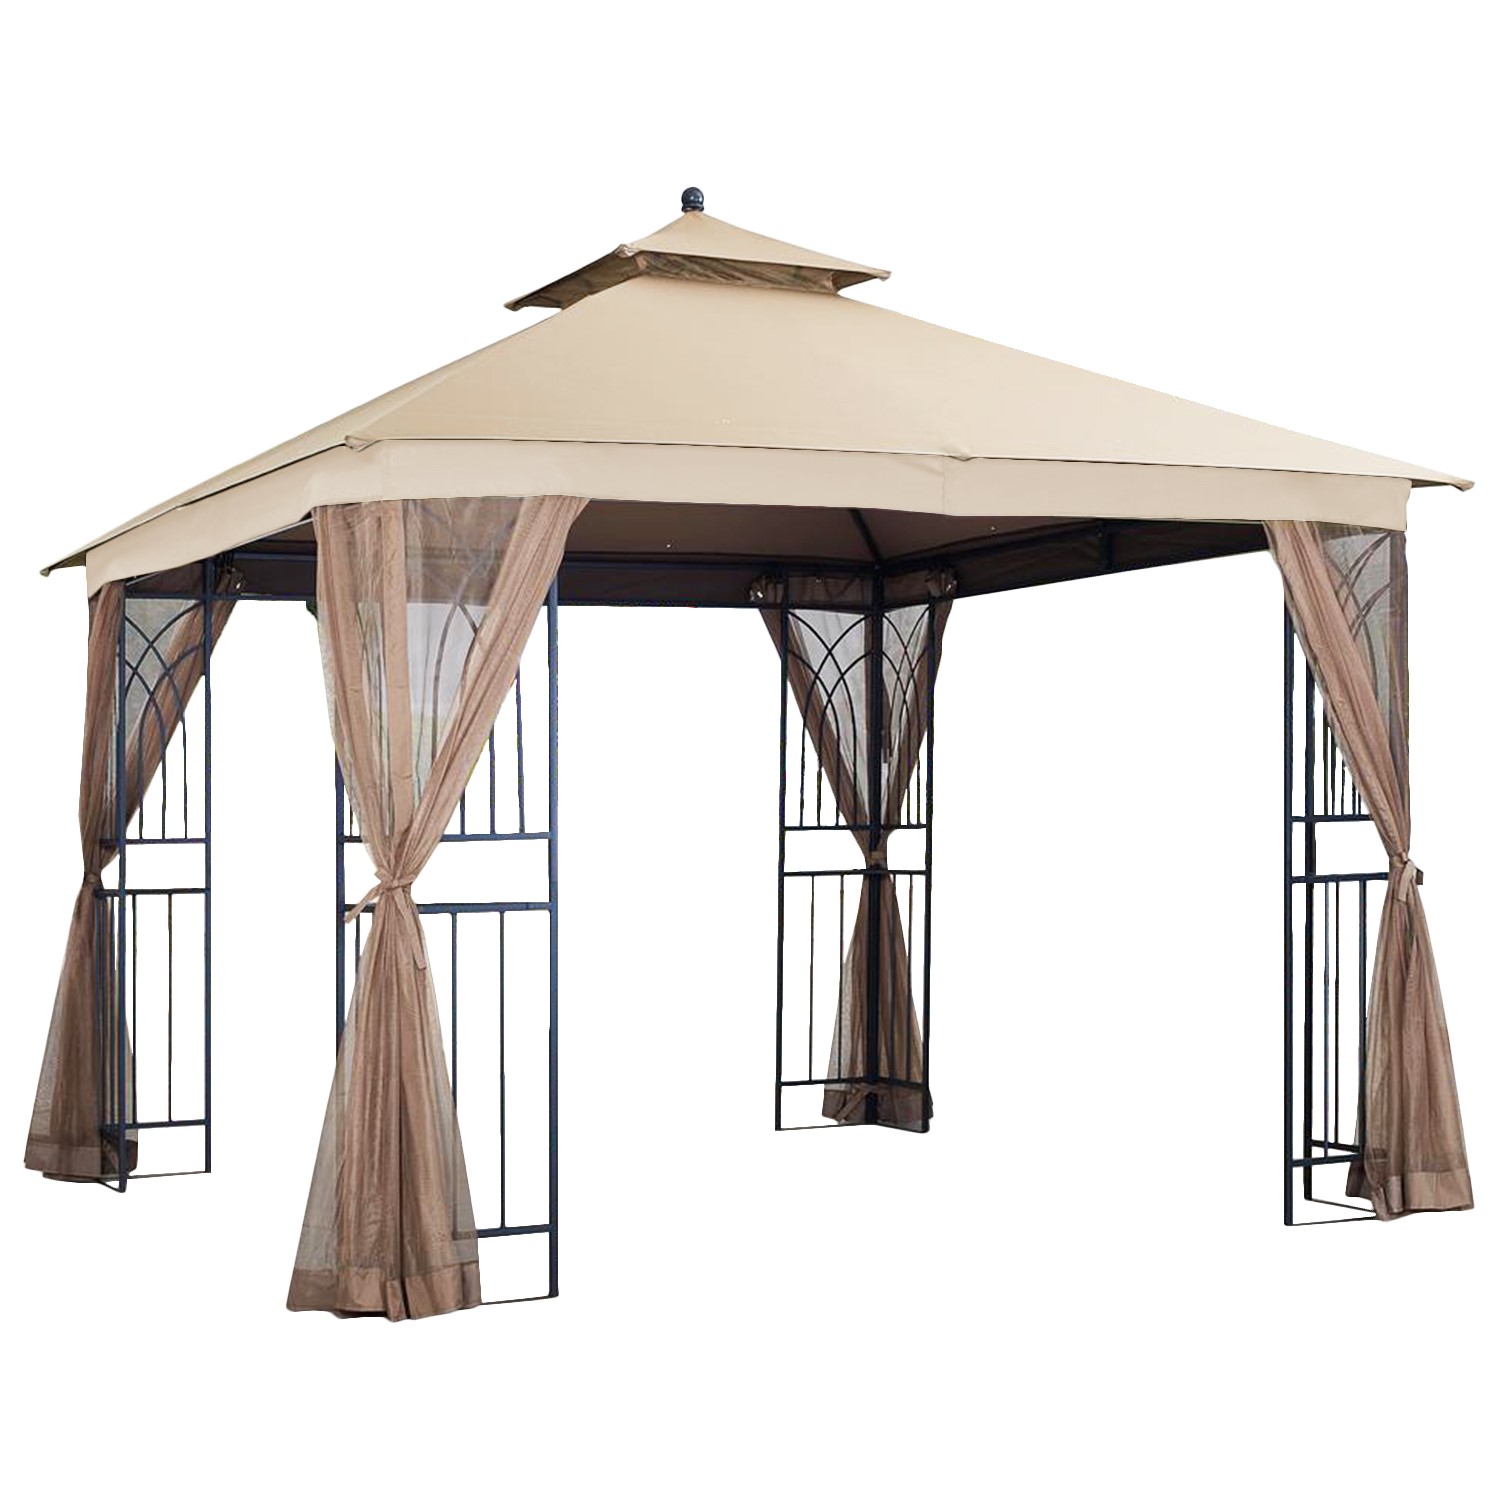 Replacement Canopy for Harmony Gazebo - Riplock 350